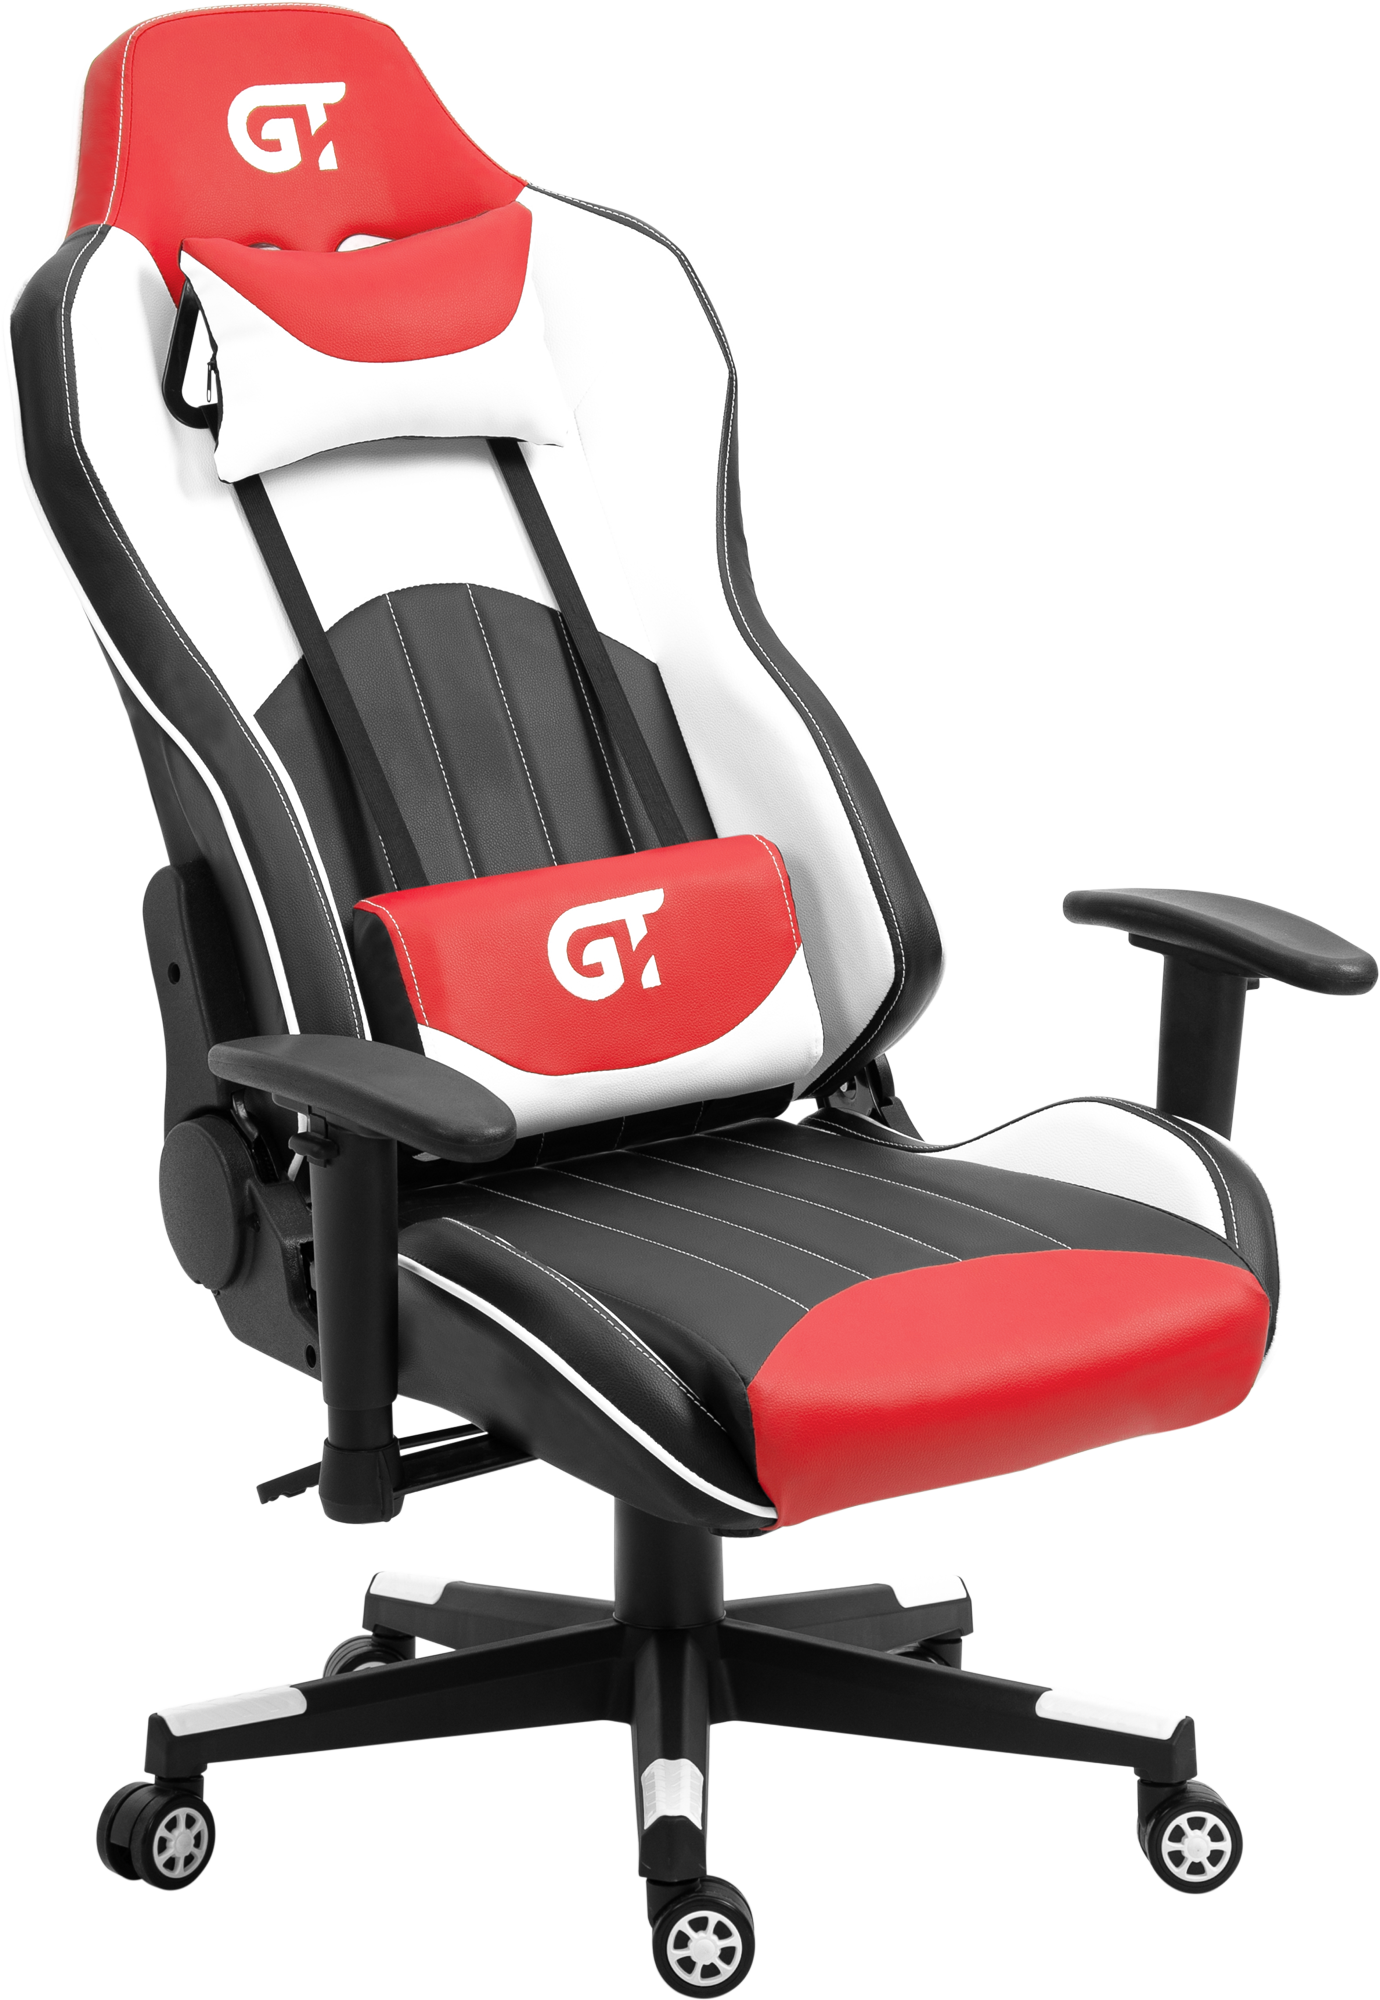 Геймерське крісло GT Racer чорне червоно-біле (X-5813 Black/Red/White) - фото 6